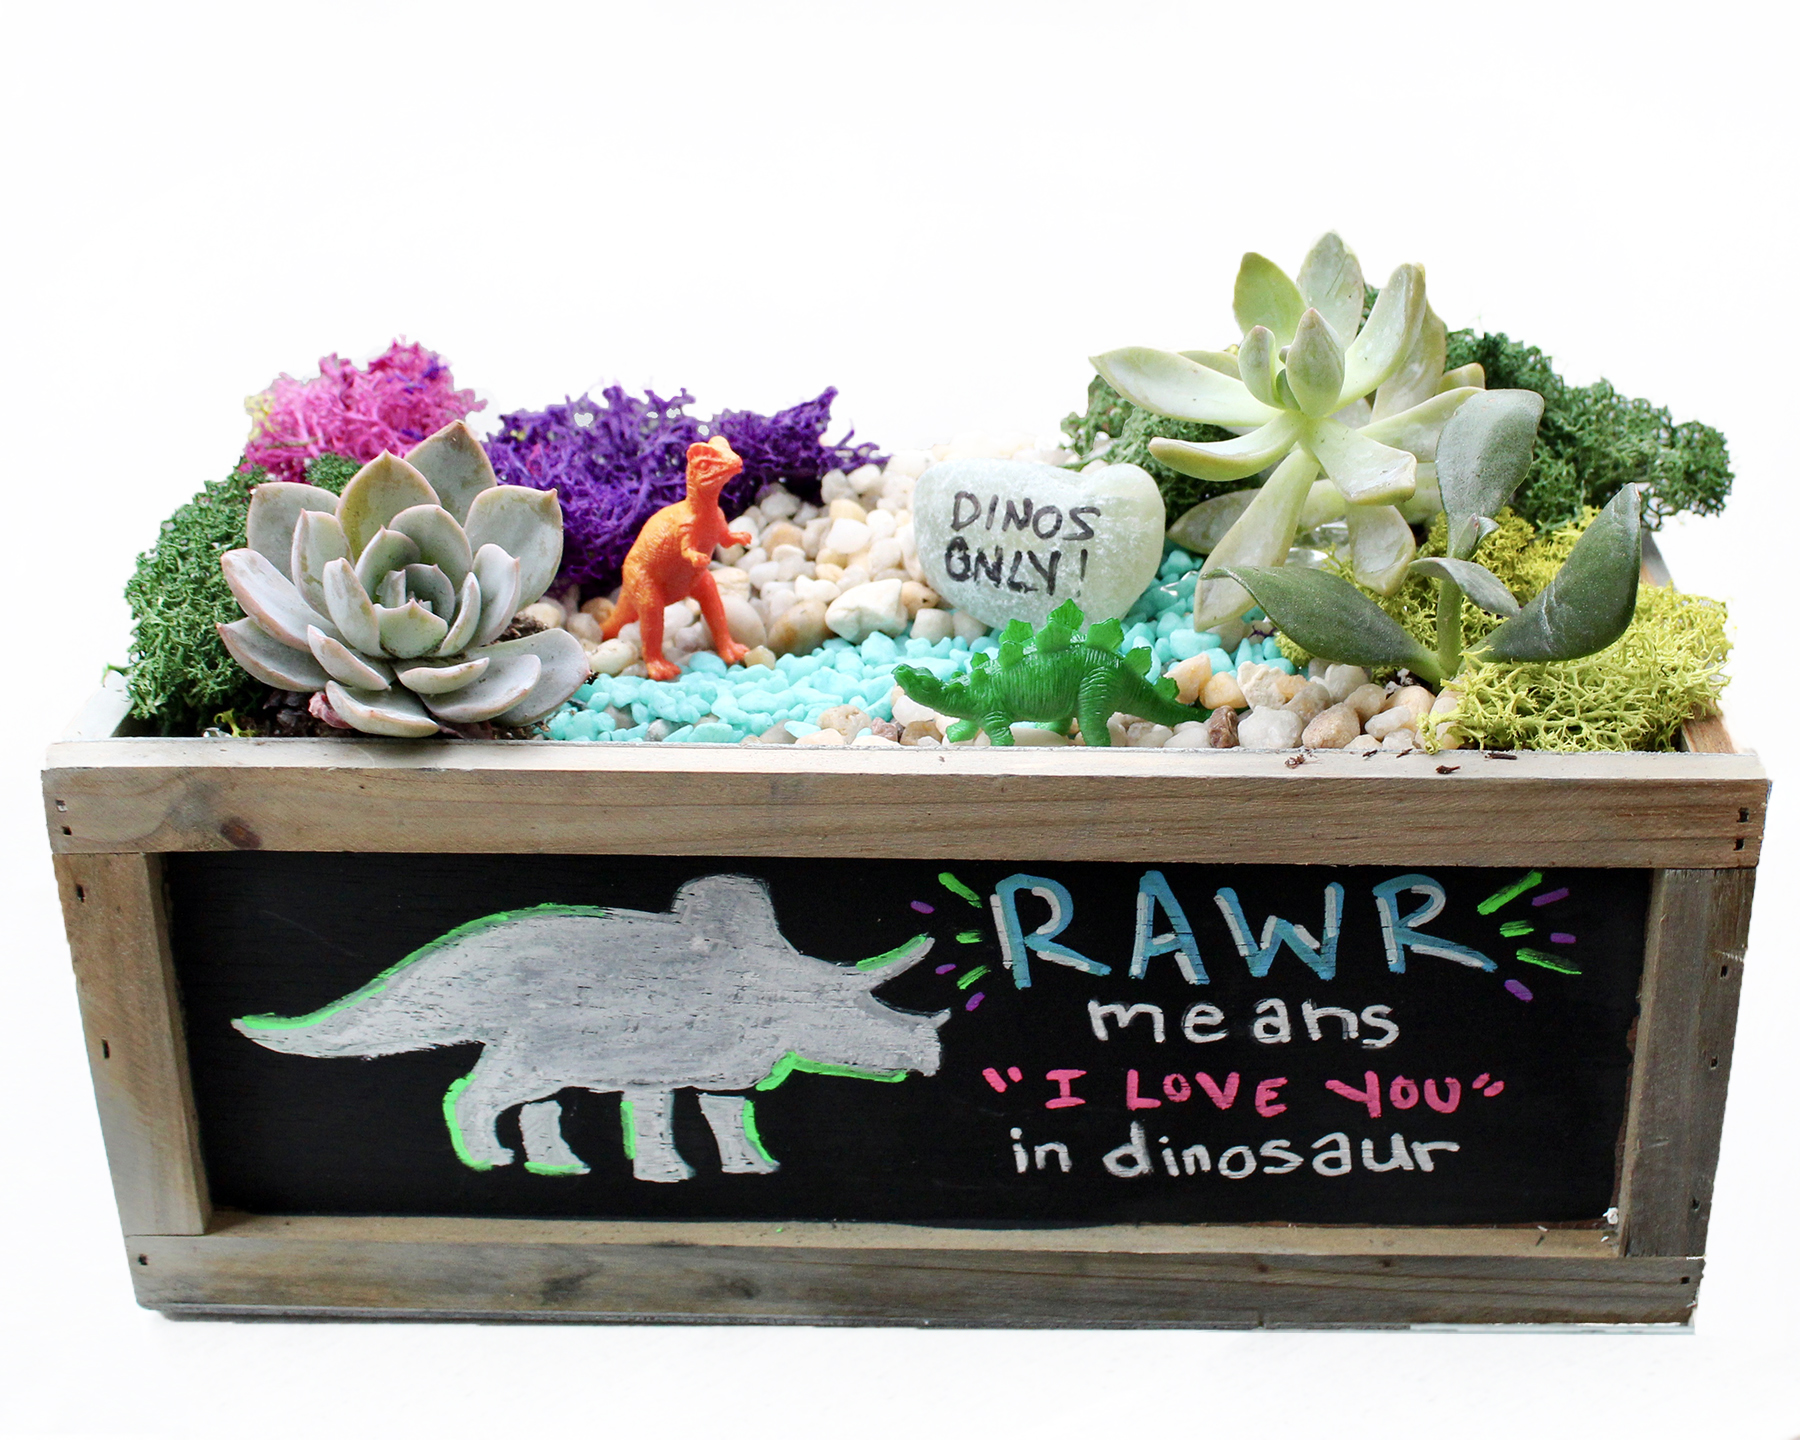 A RAWR Dino Chalkboard Garden plant nite project by Yaymaker